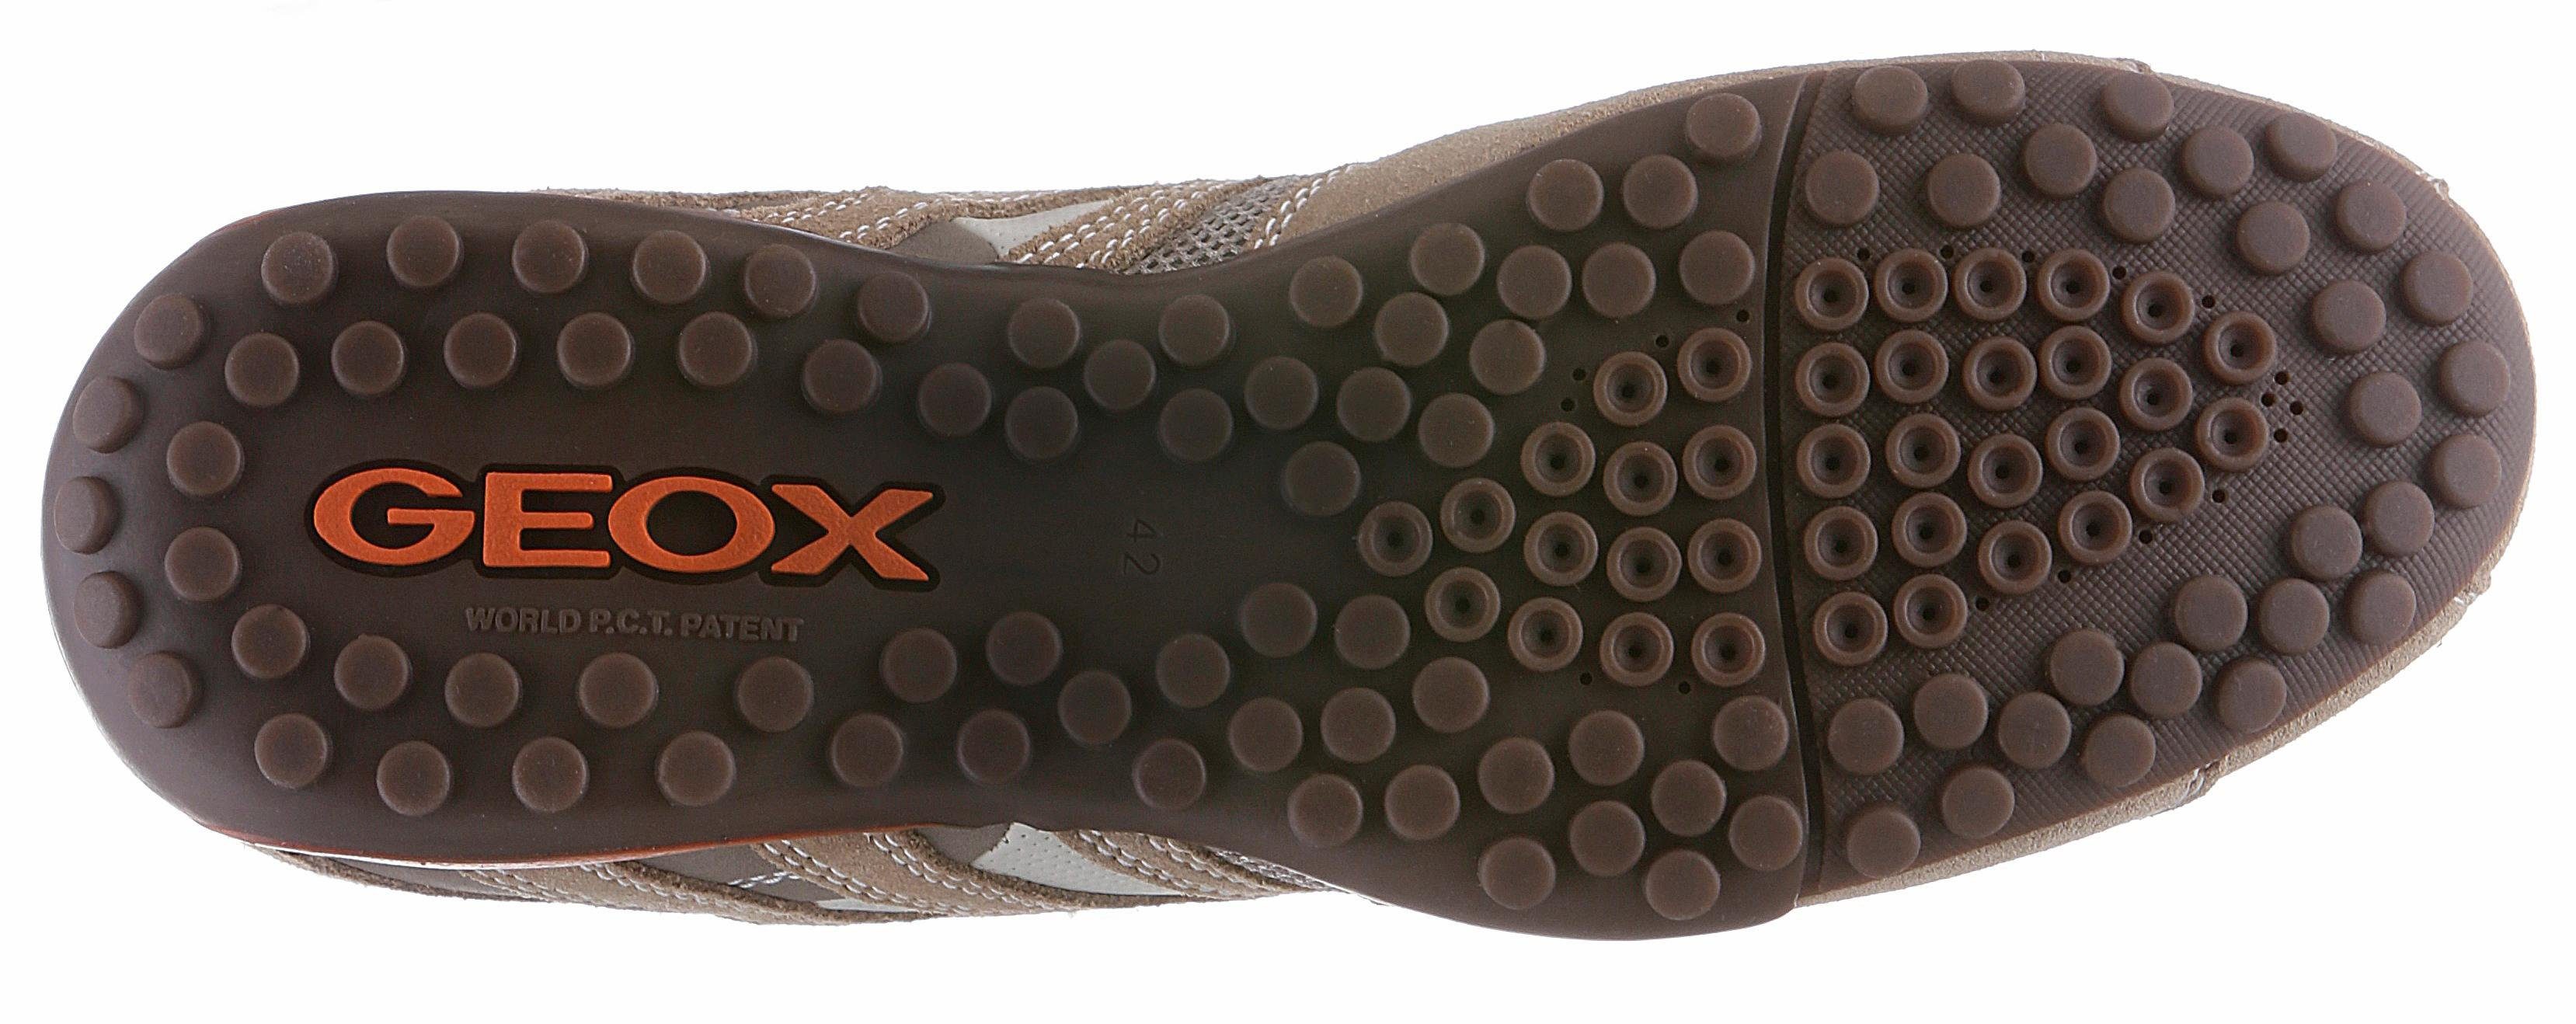 Geox Snake Membrane Sneaker Spezial beige mit Materialmix Geox im